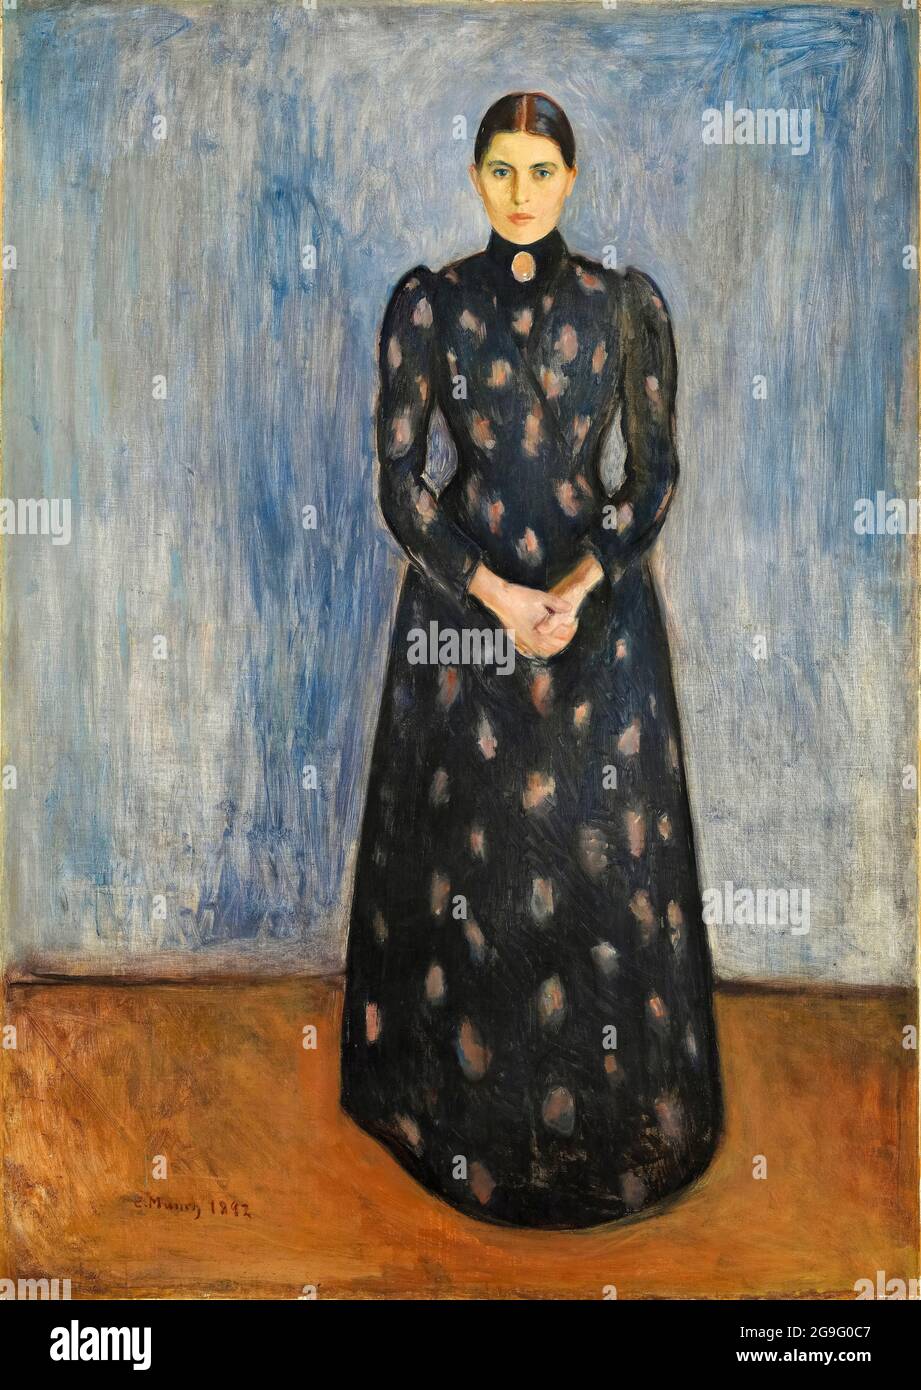 Edvard Munch, Inger en Noir et Violet, portrait painting, 1892 Banque D'Images